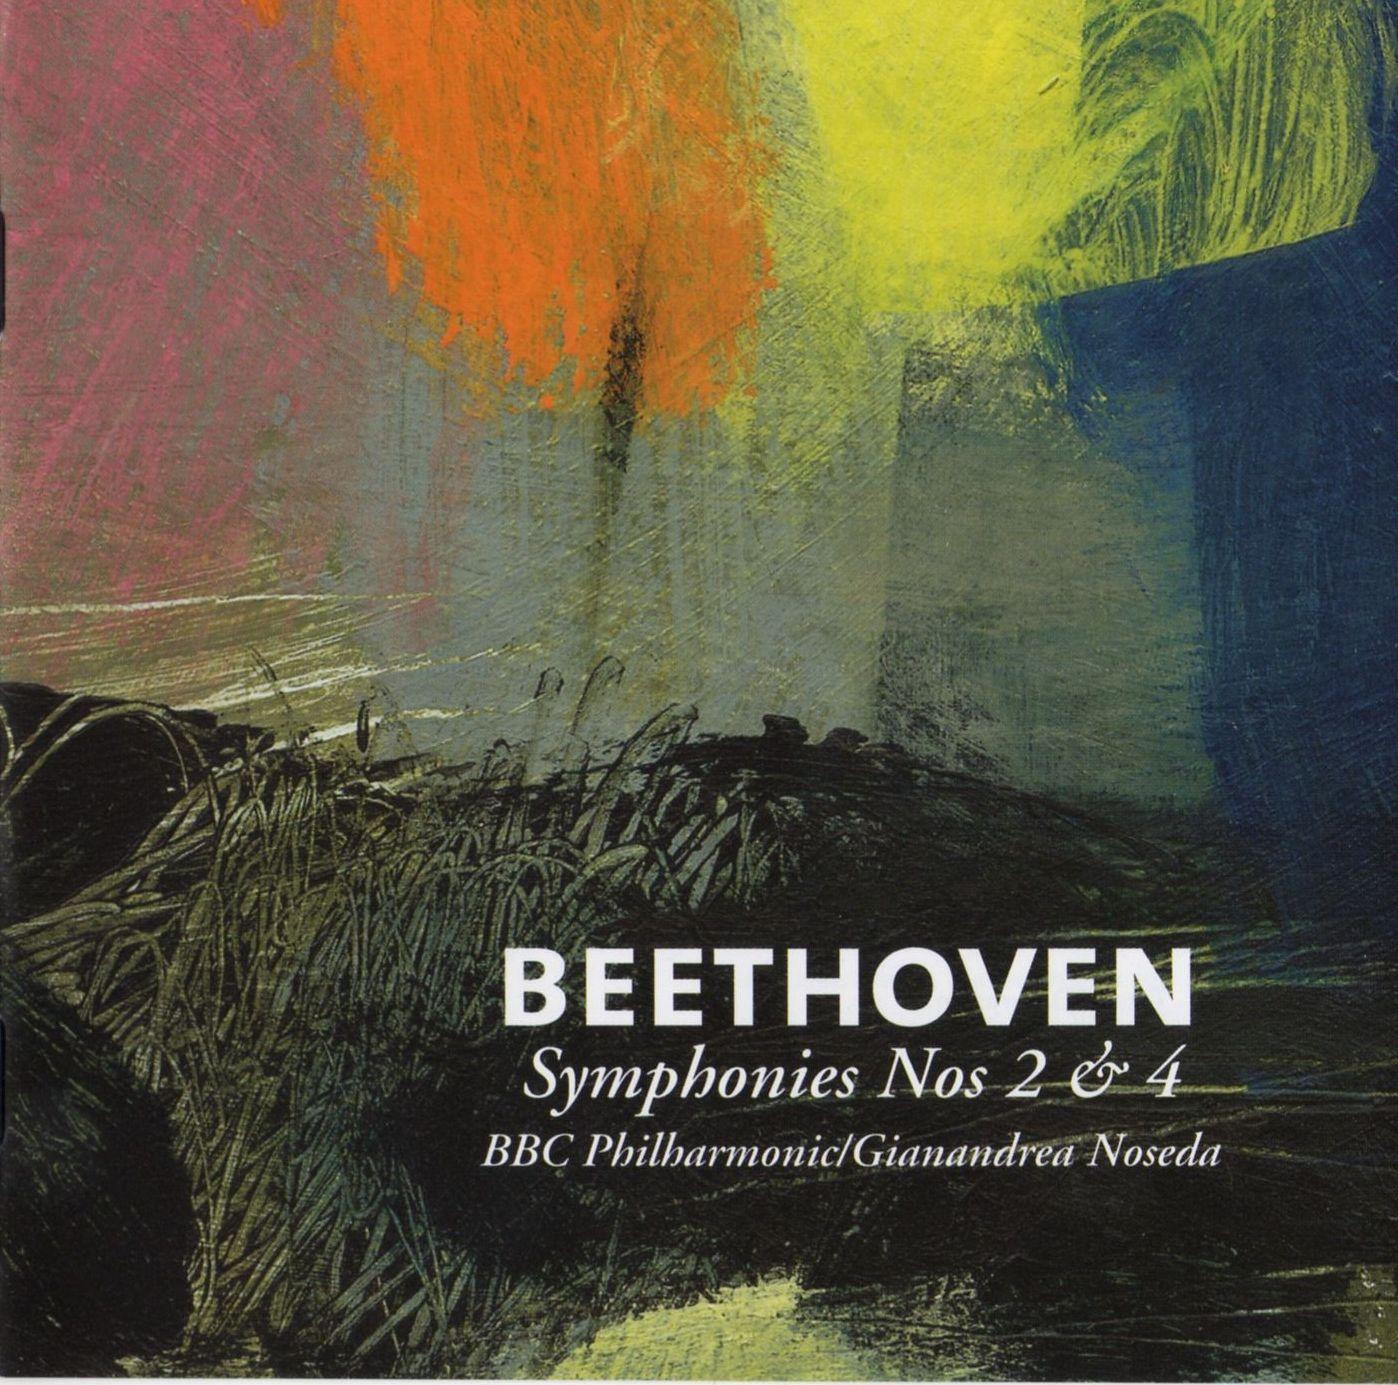 Beethoven Symphonies 2 & 4